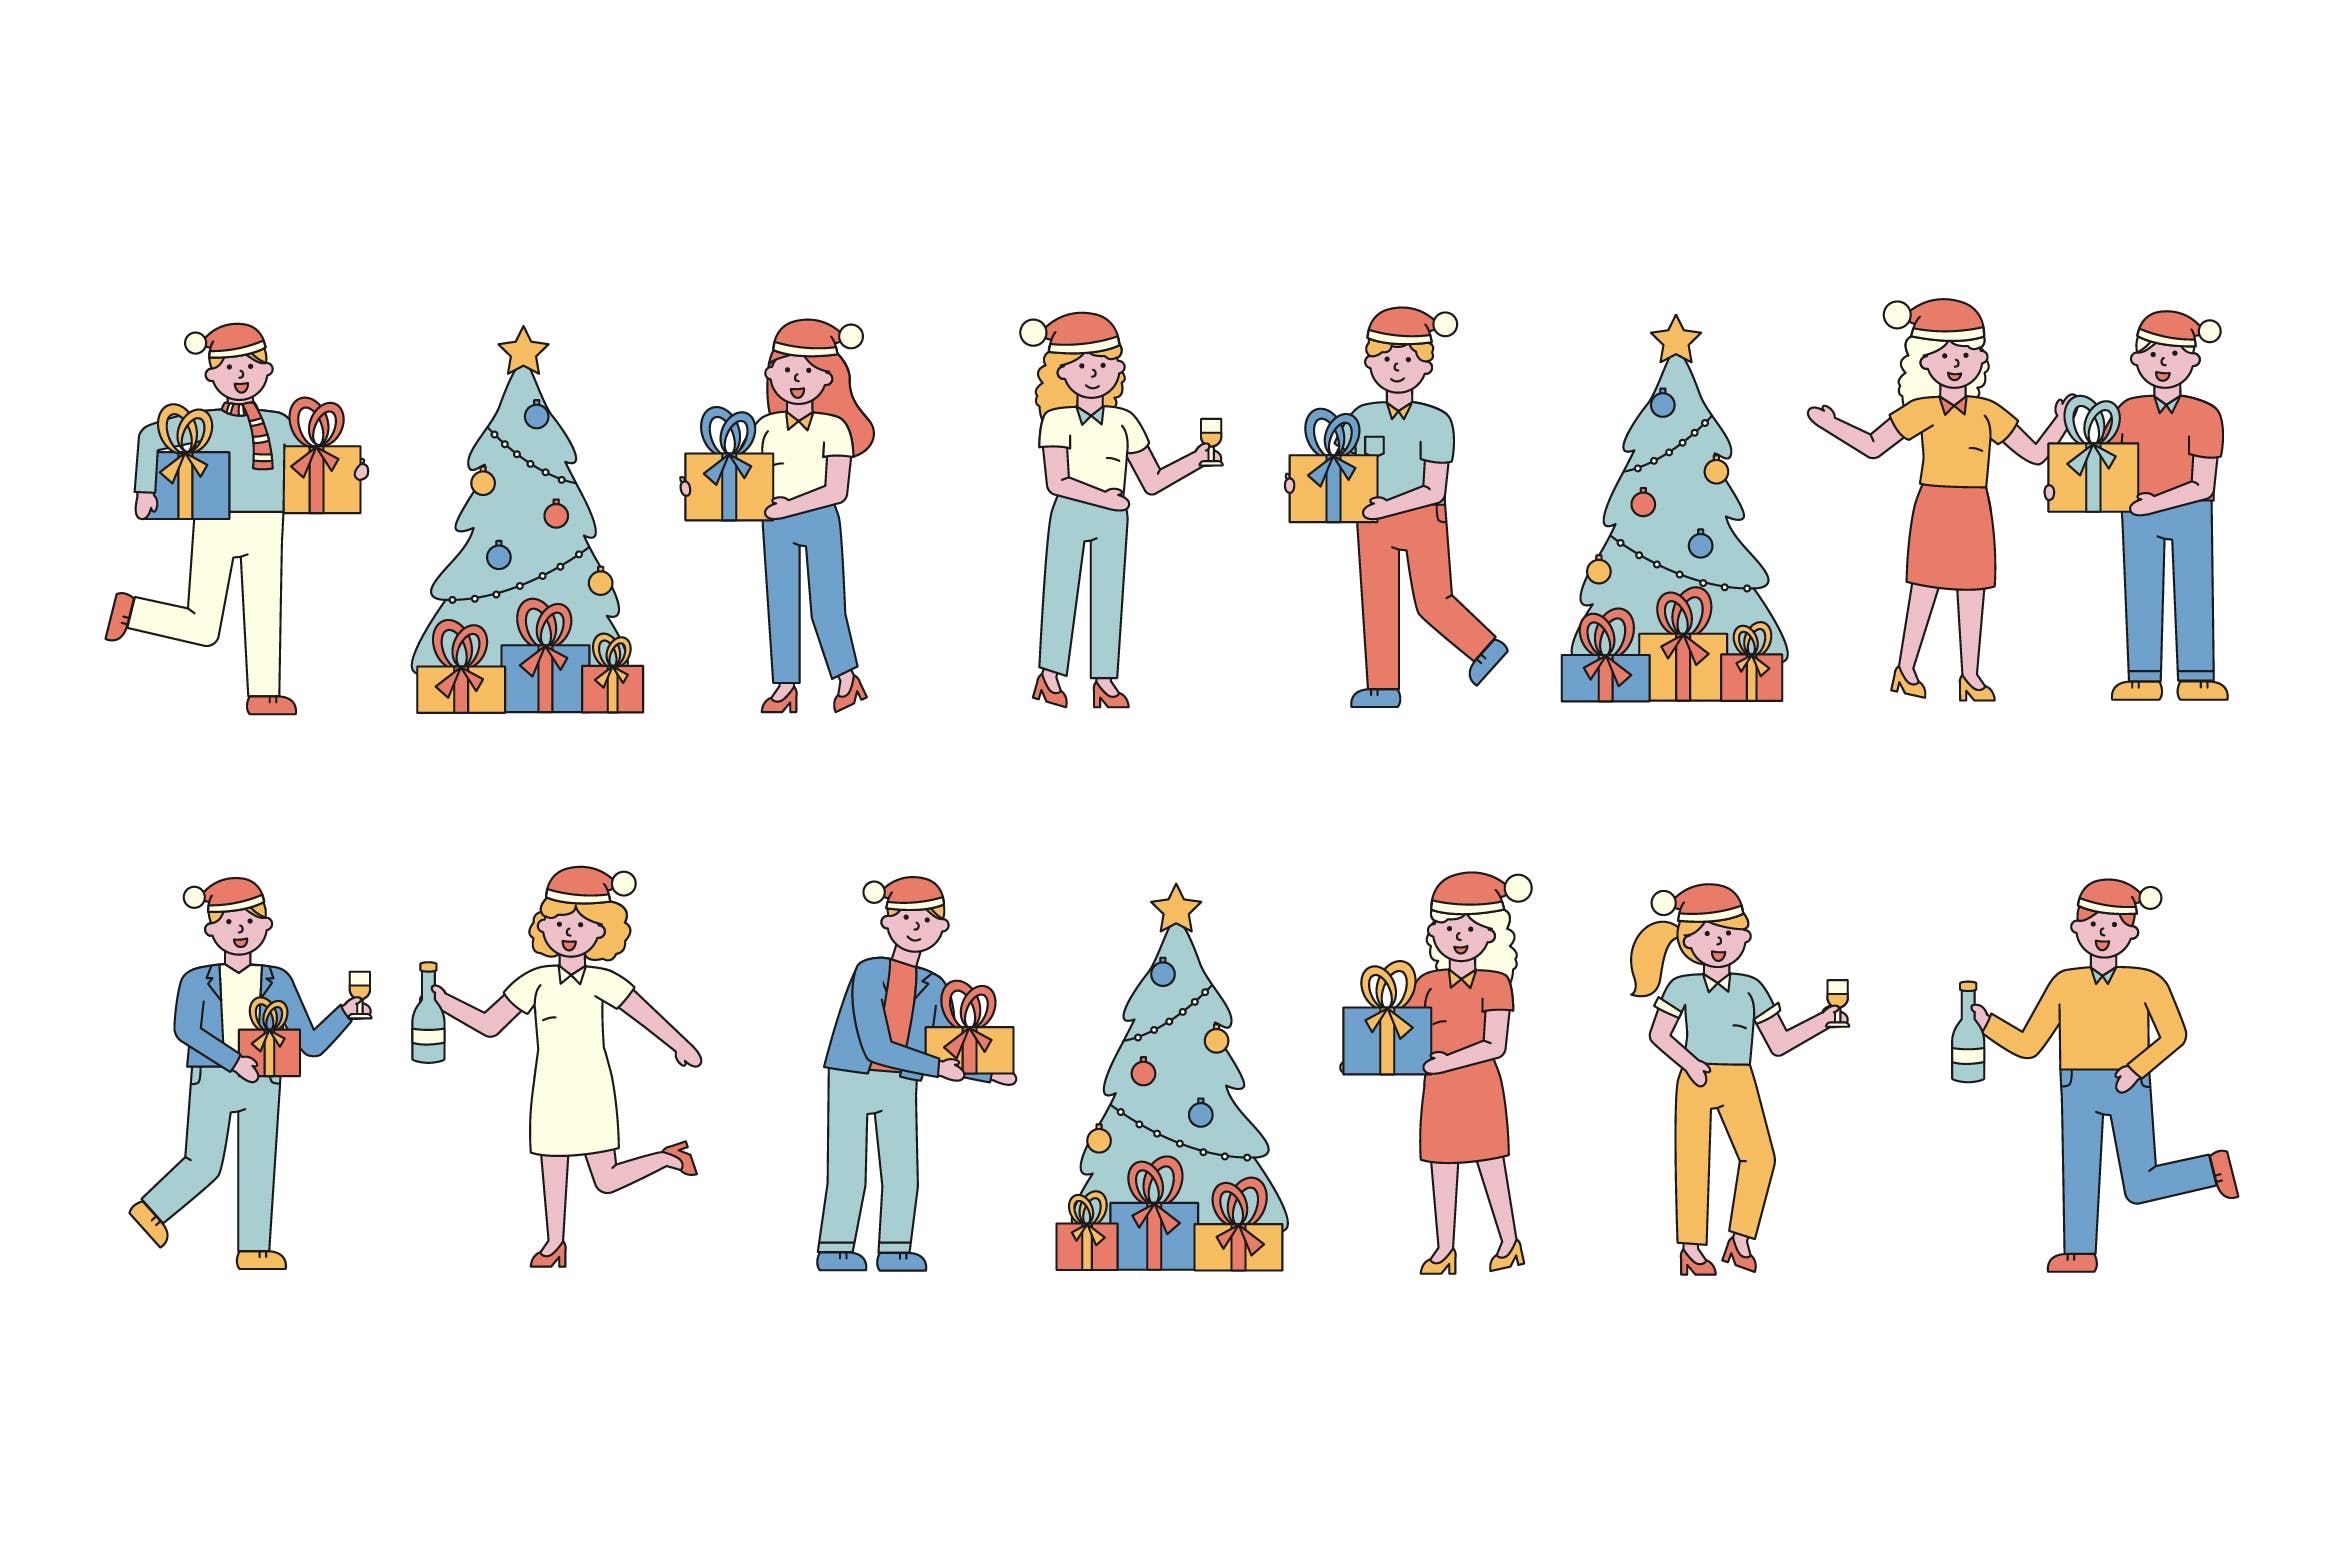 庆祝新年人物形象线条艺术矢量插画素材 New Year Lineart People Character Collection插图